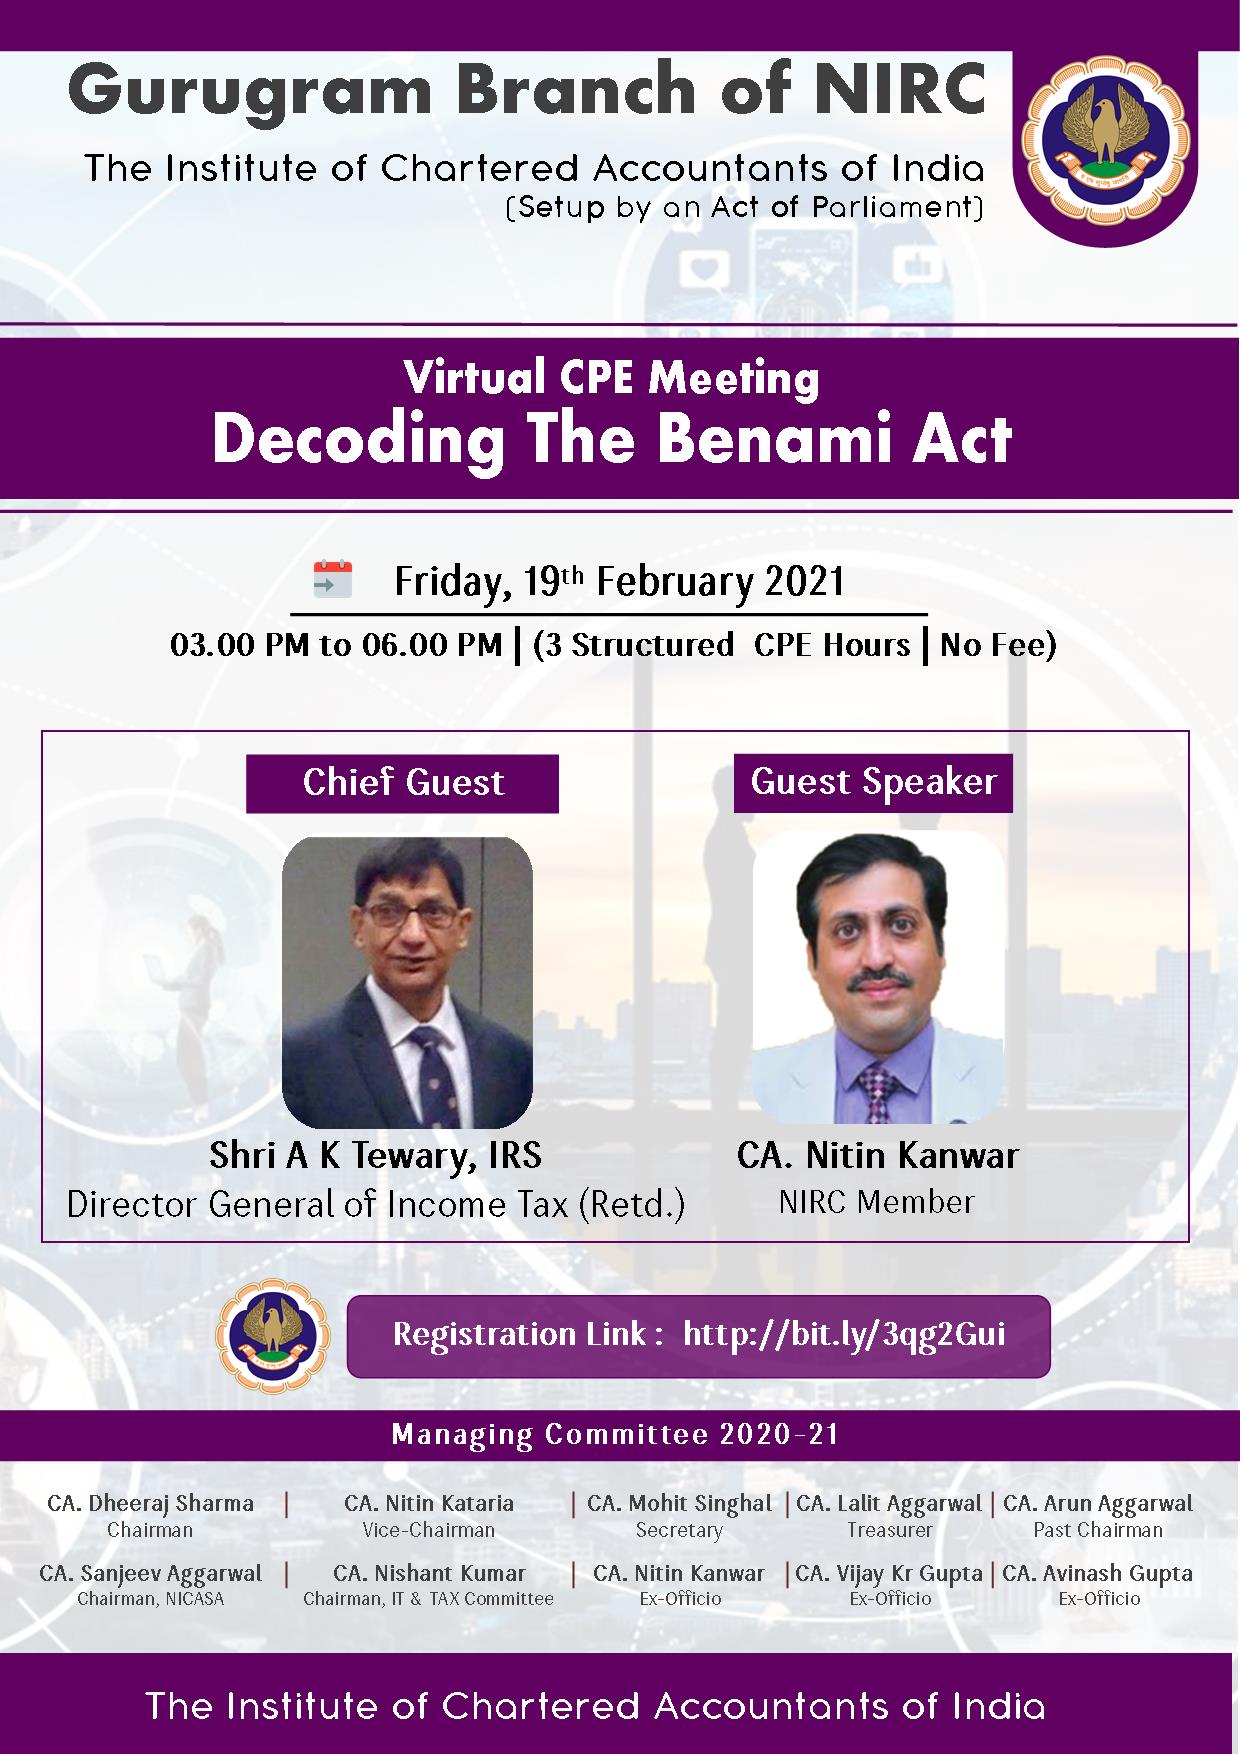 Virtual CPE Meeting on Decoding The Benami Act